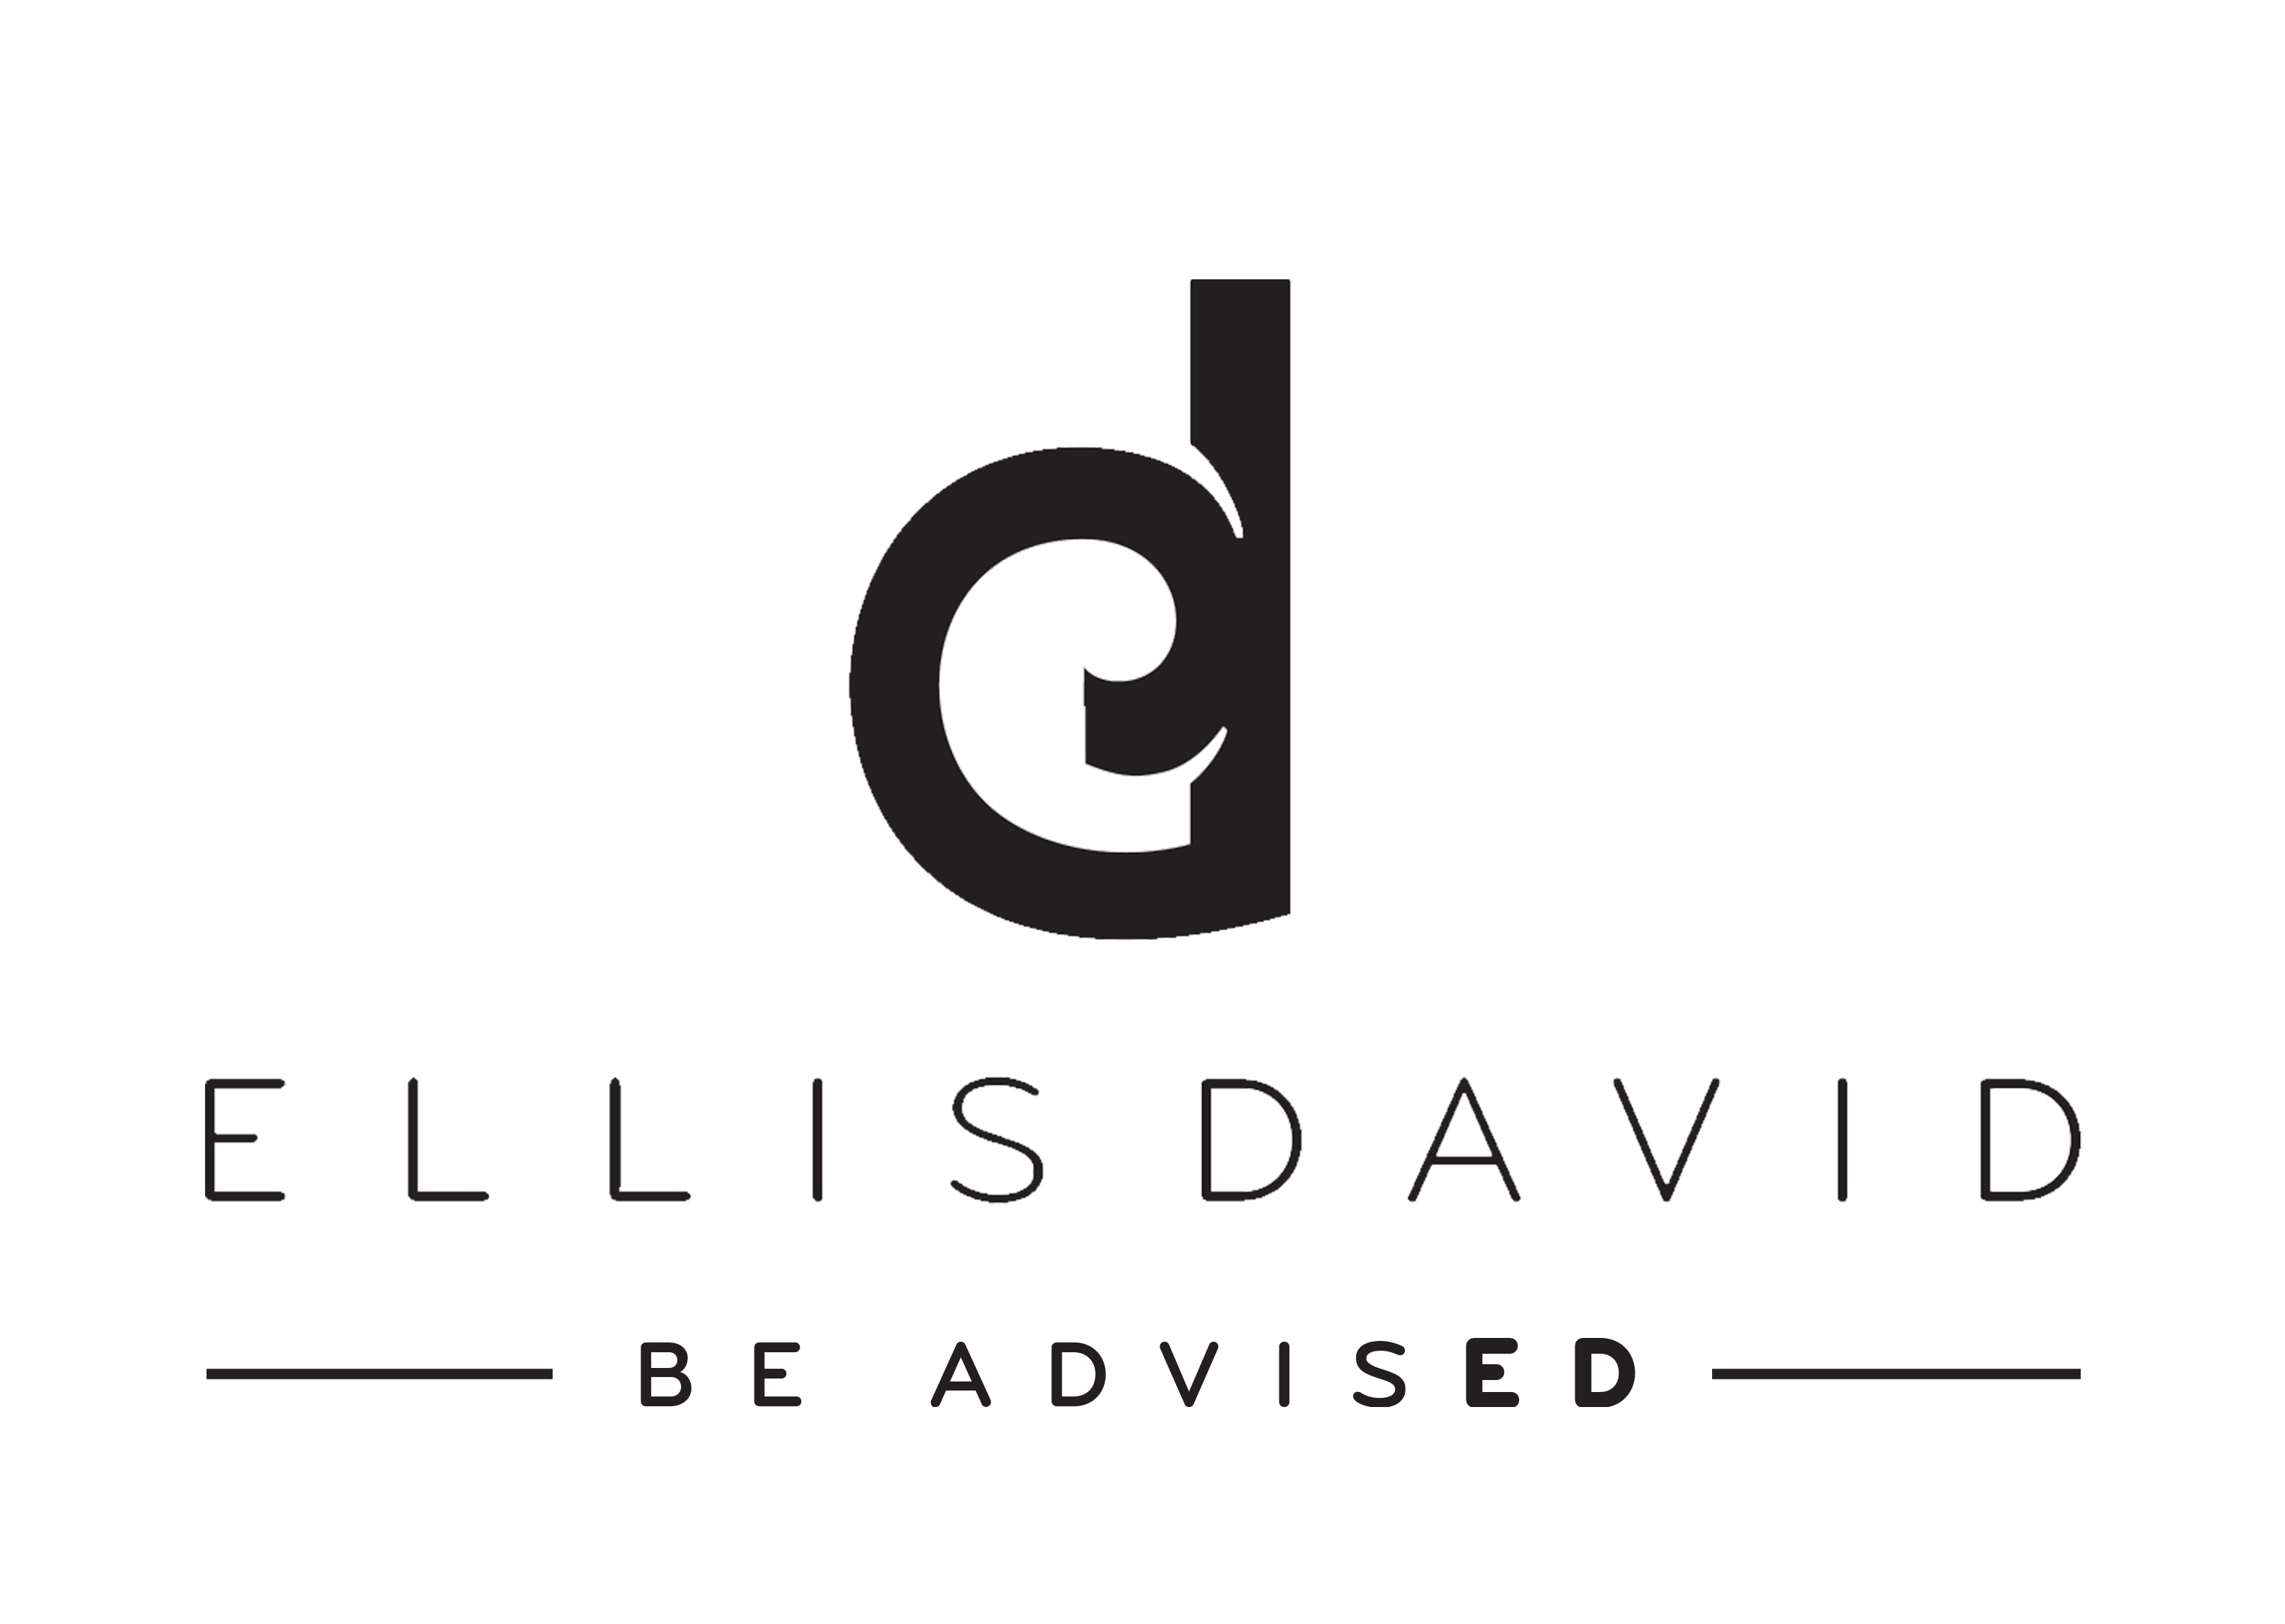 Ellis Logo - Business & Personal Insurance Broker London | Ellis David